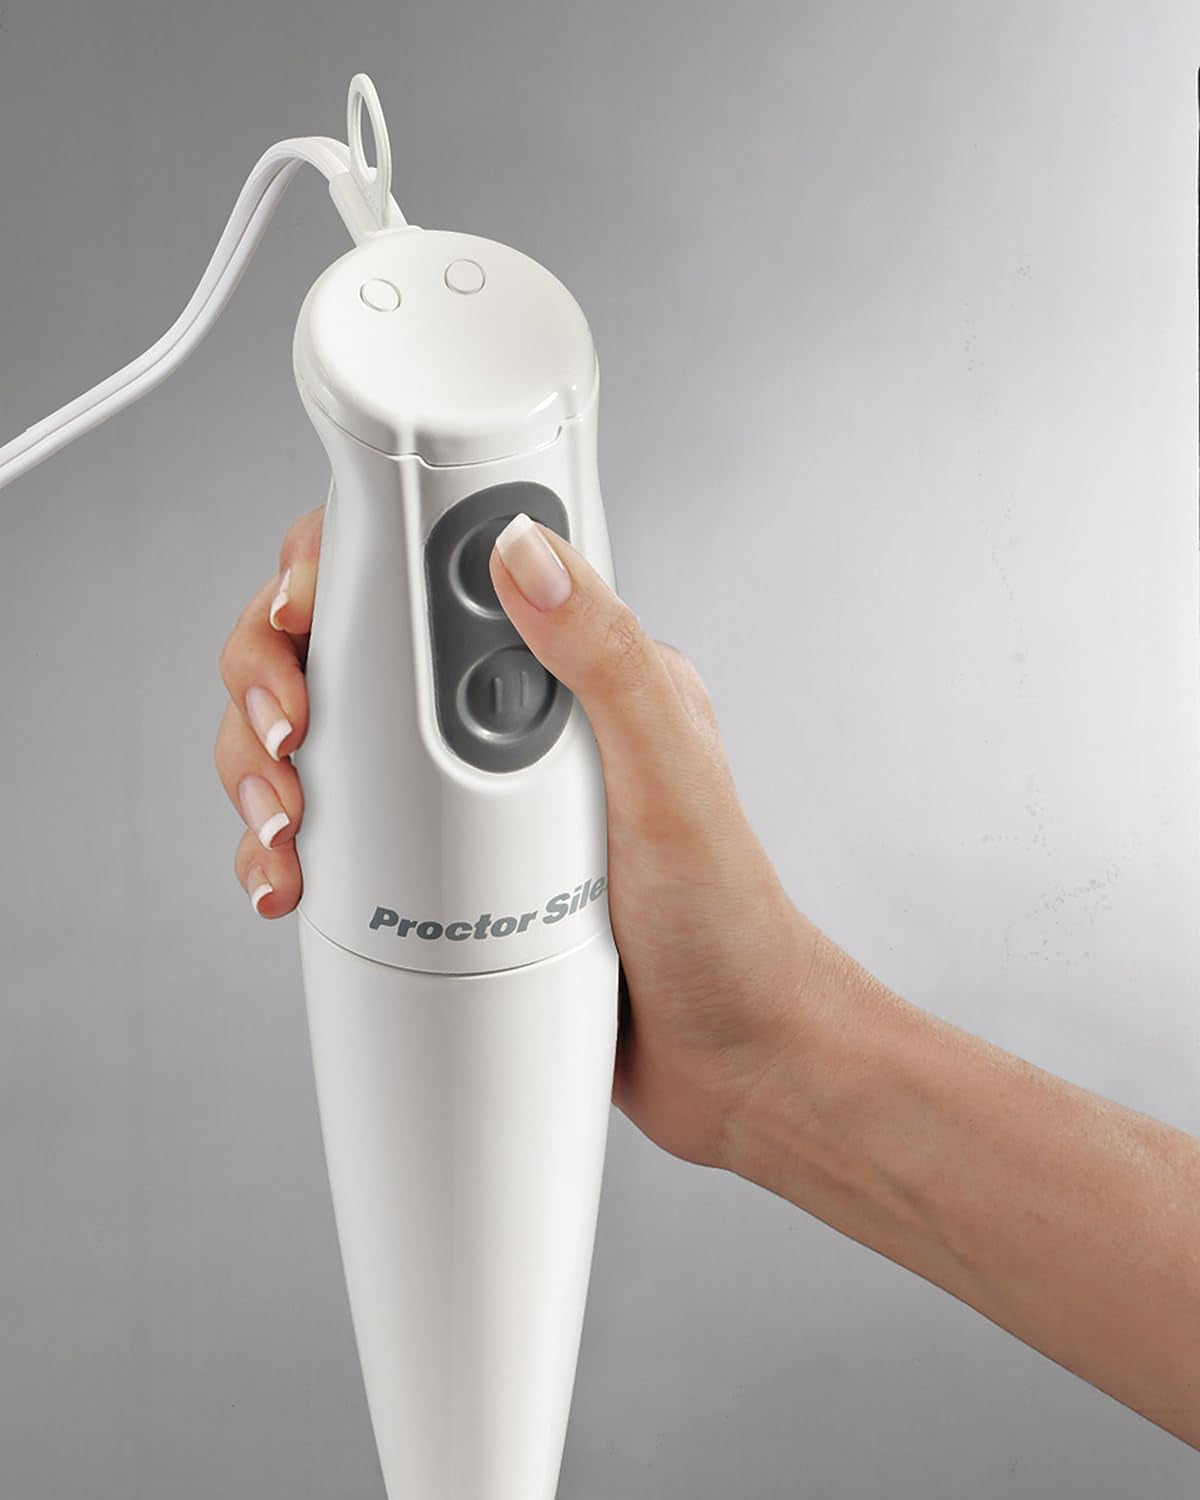 Proctor-Silex Electric Immersion Hand Blender with Detachable Dishwasher Safe Handheld Blending Stick, 2-Speeds, 150 Watts, White  Hamilton Beach   